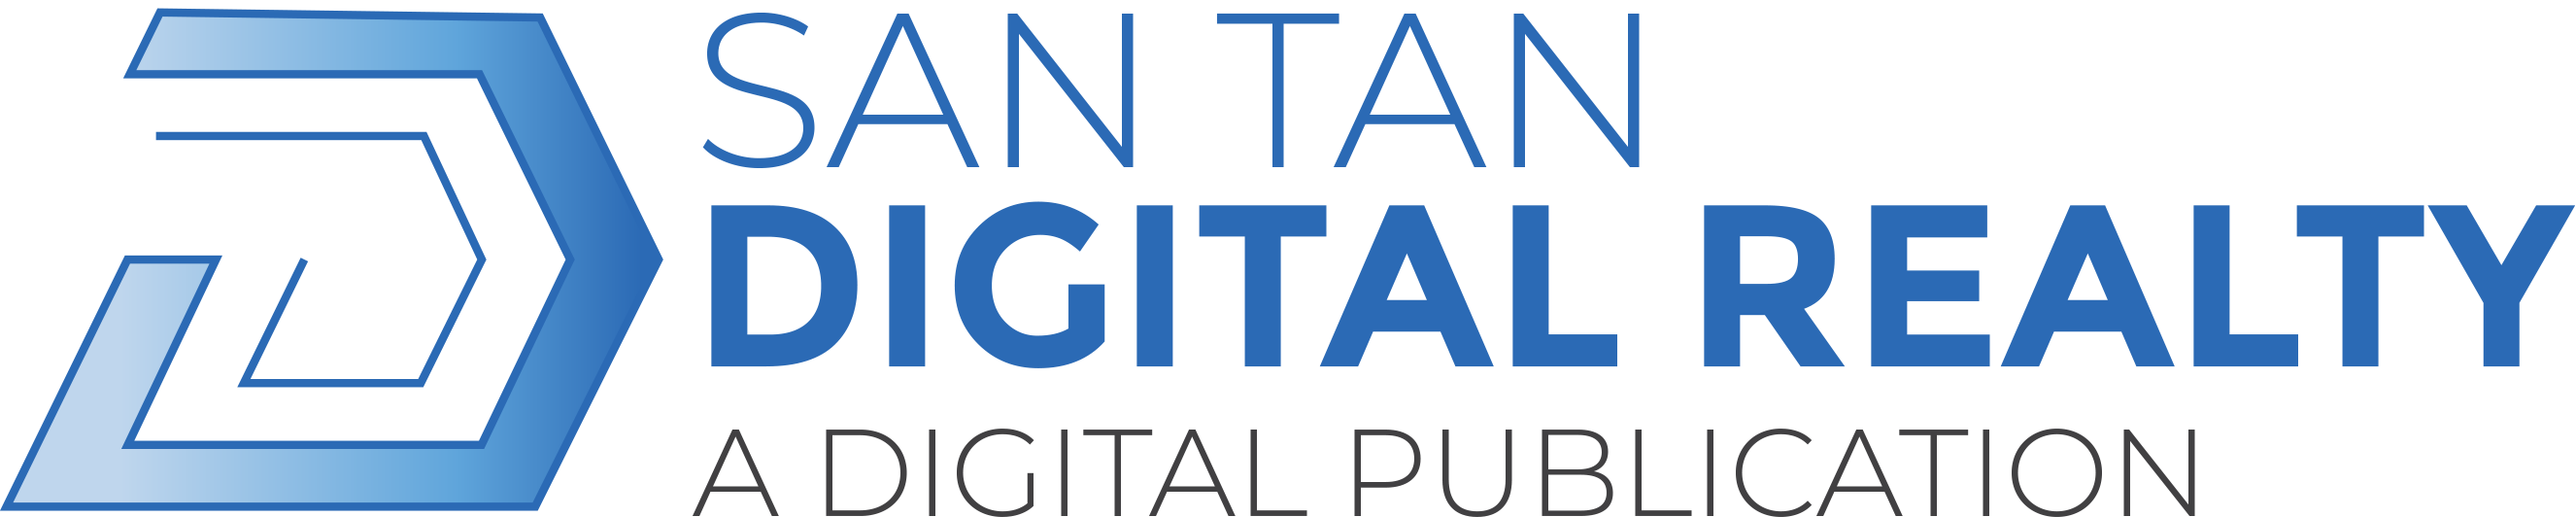 San Tan Digital Realty Logo